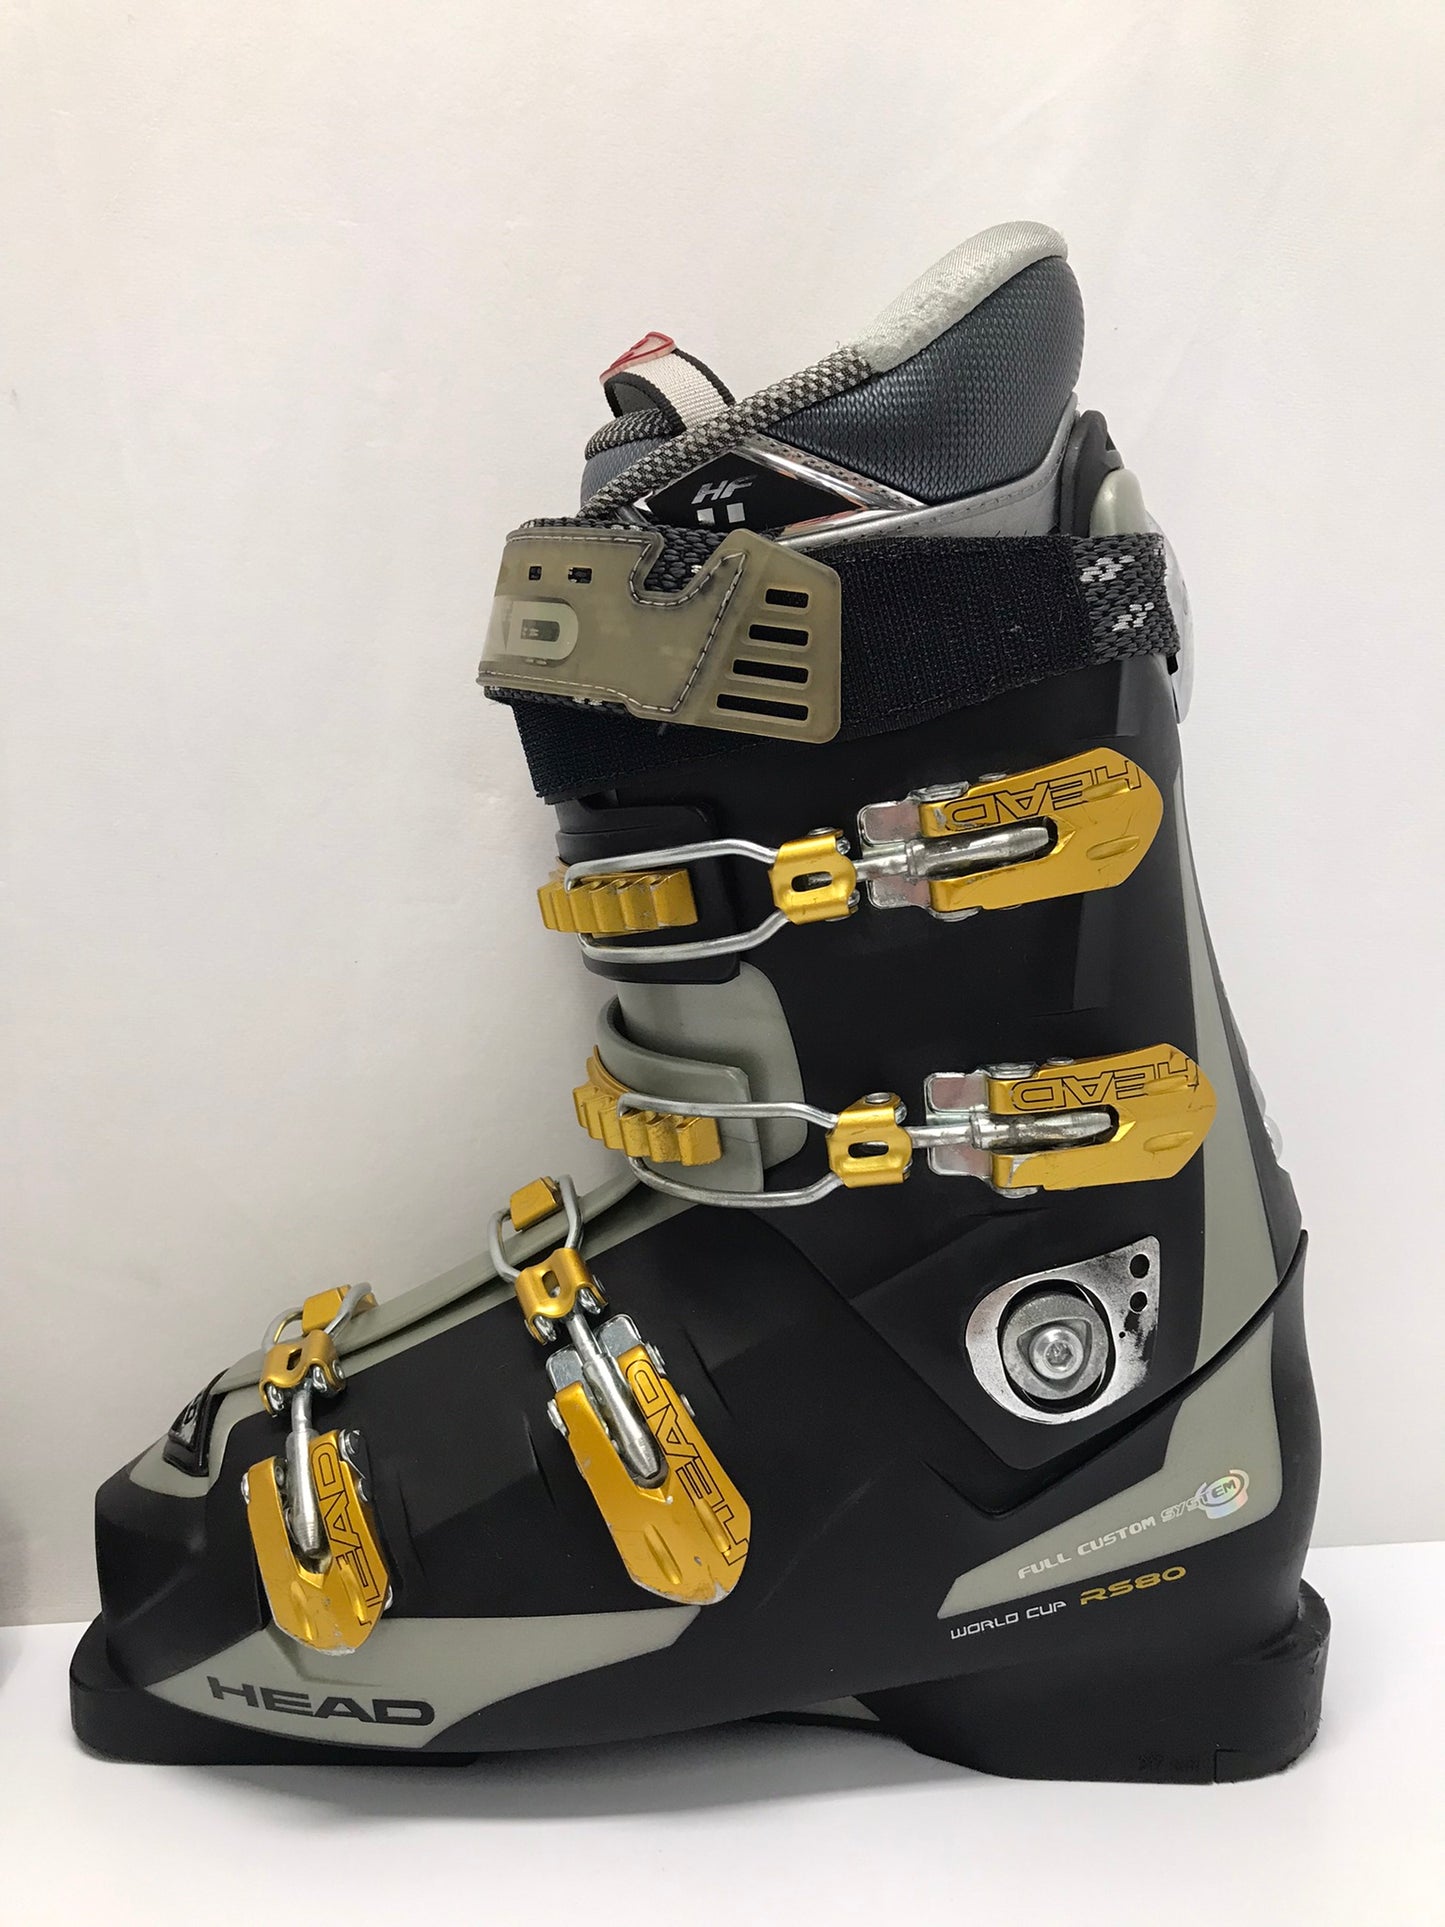 Ski Boots Mondo Size 27.5 Men's Size 9 Ladies Size 10 317 mm Head World Cup Black Gold Grey New Demo Model